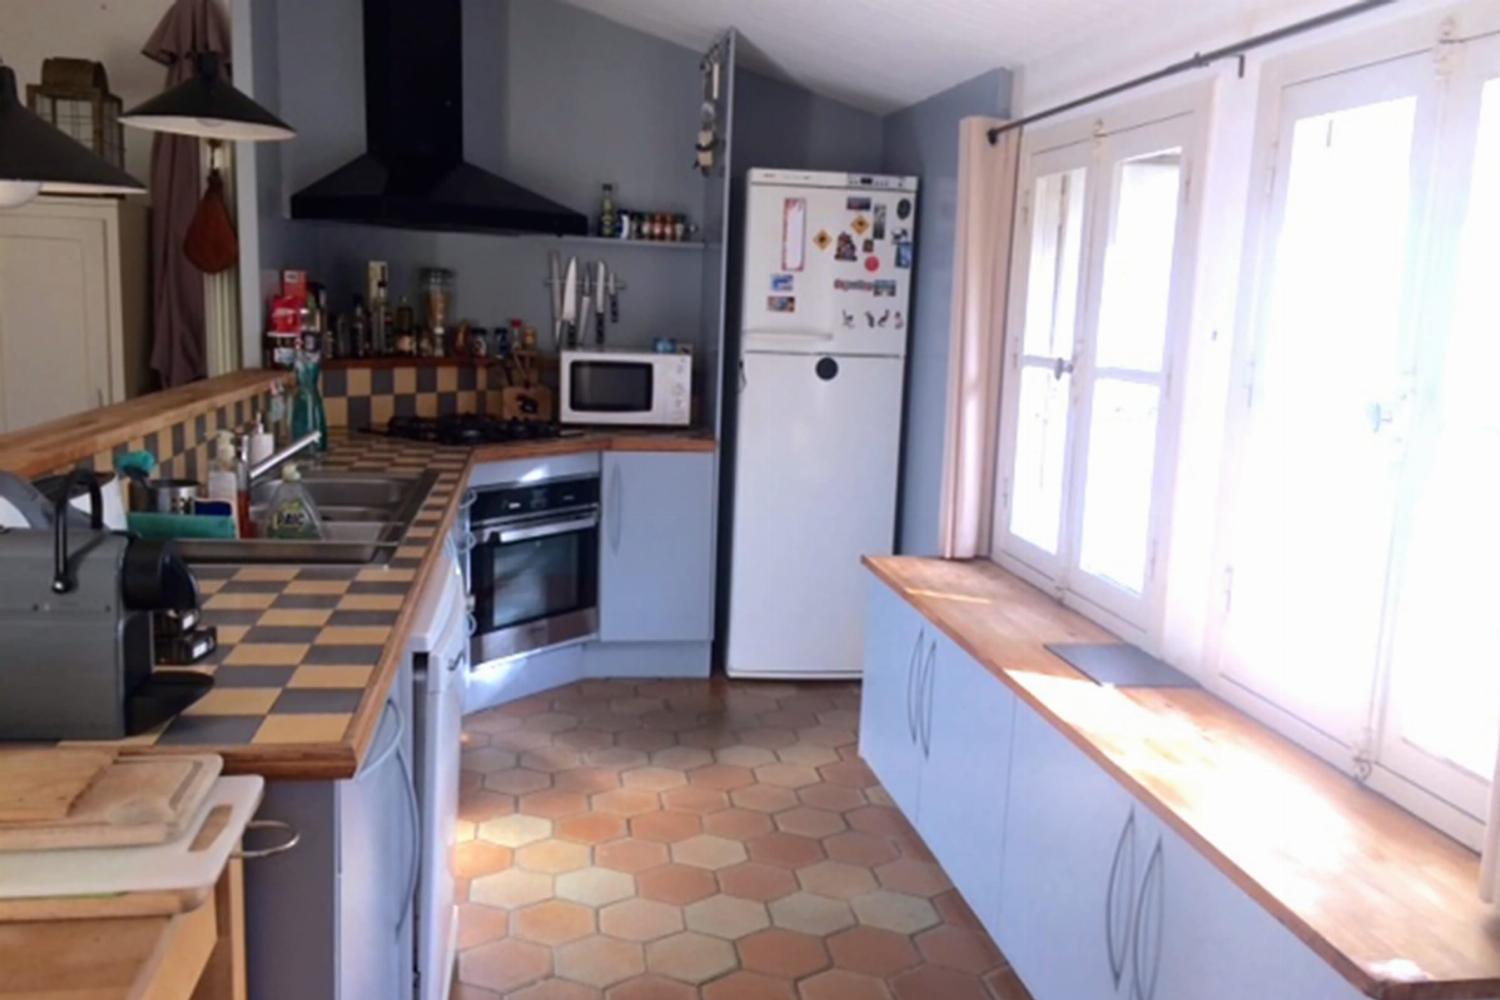 Kitchen | Rental home in Gironde